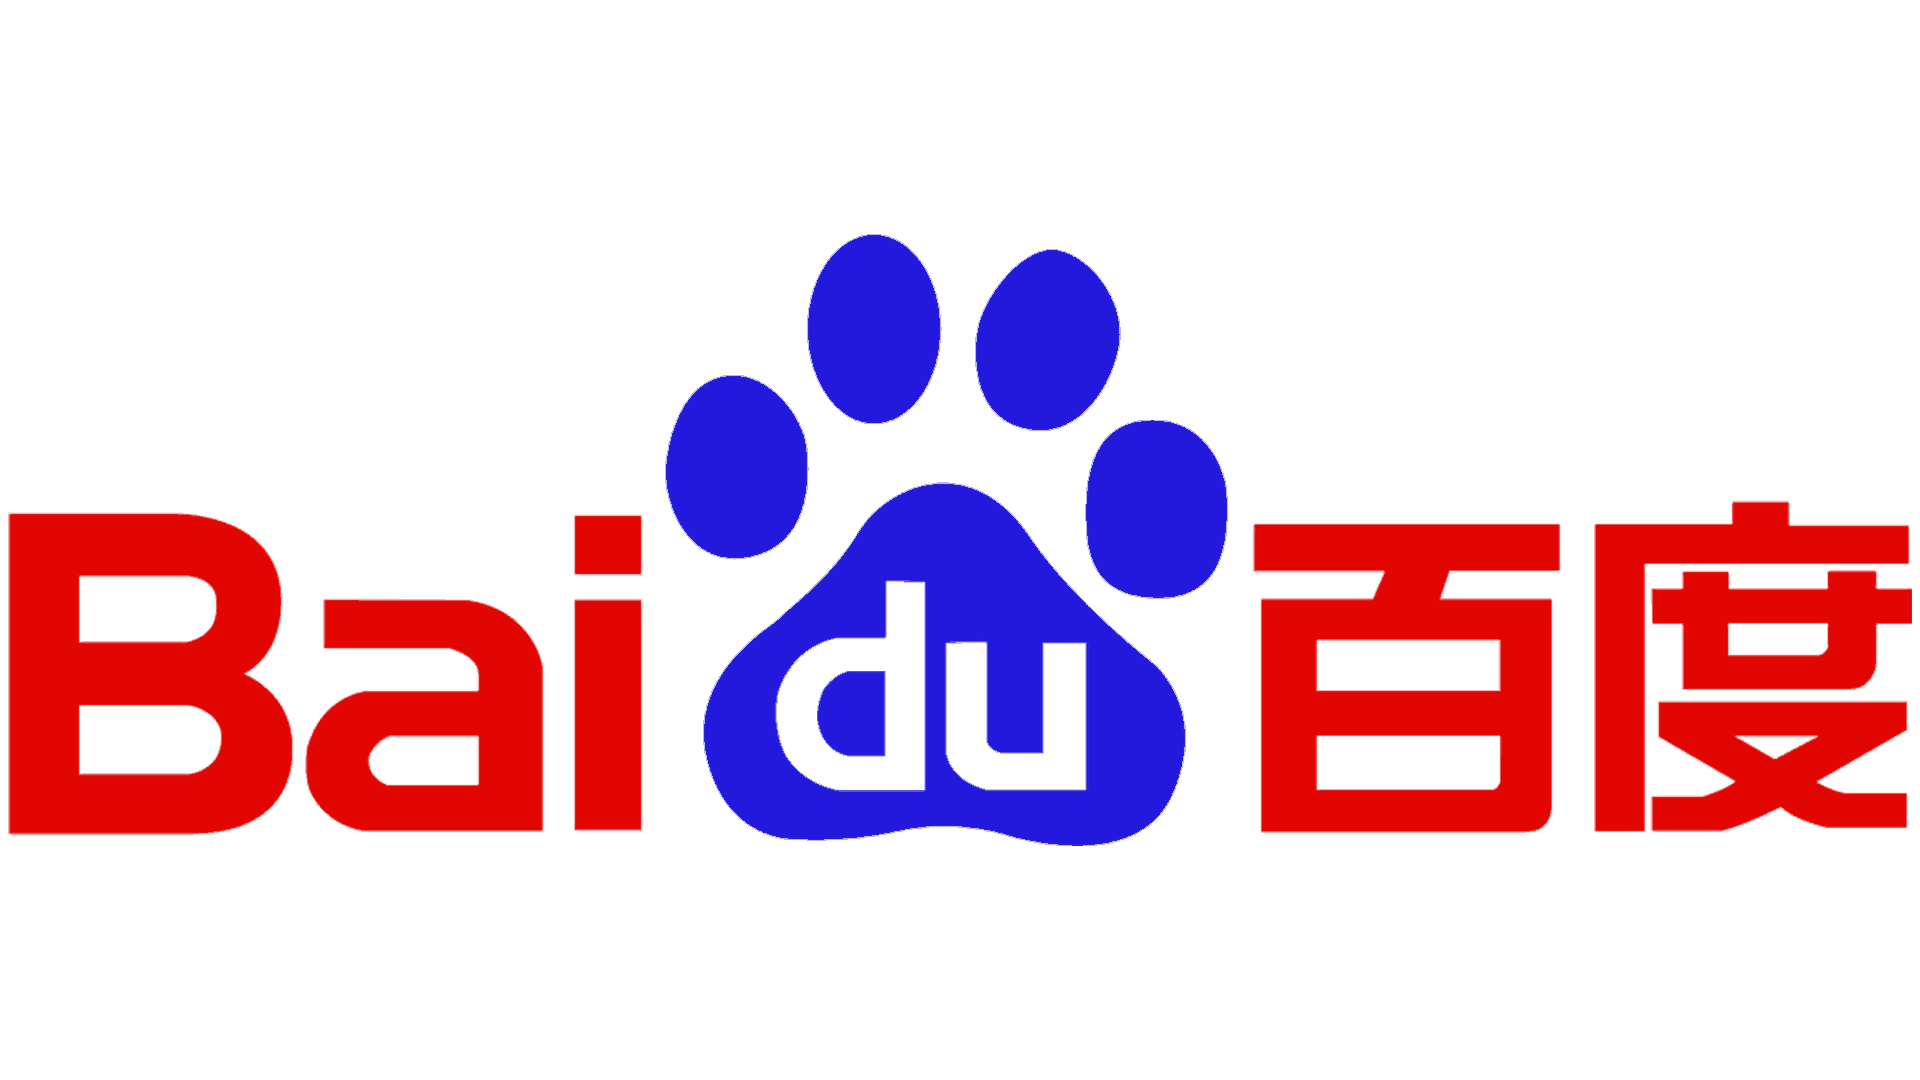 Baidu’s “Xuperchain” launch is just the beginning of China’s blockchain ...